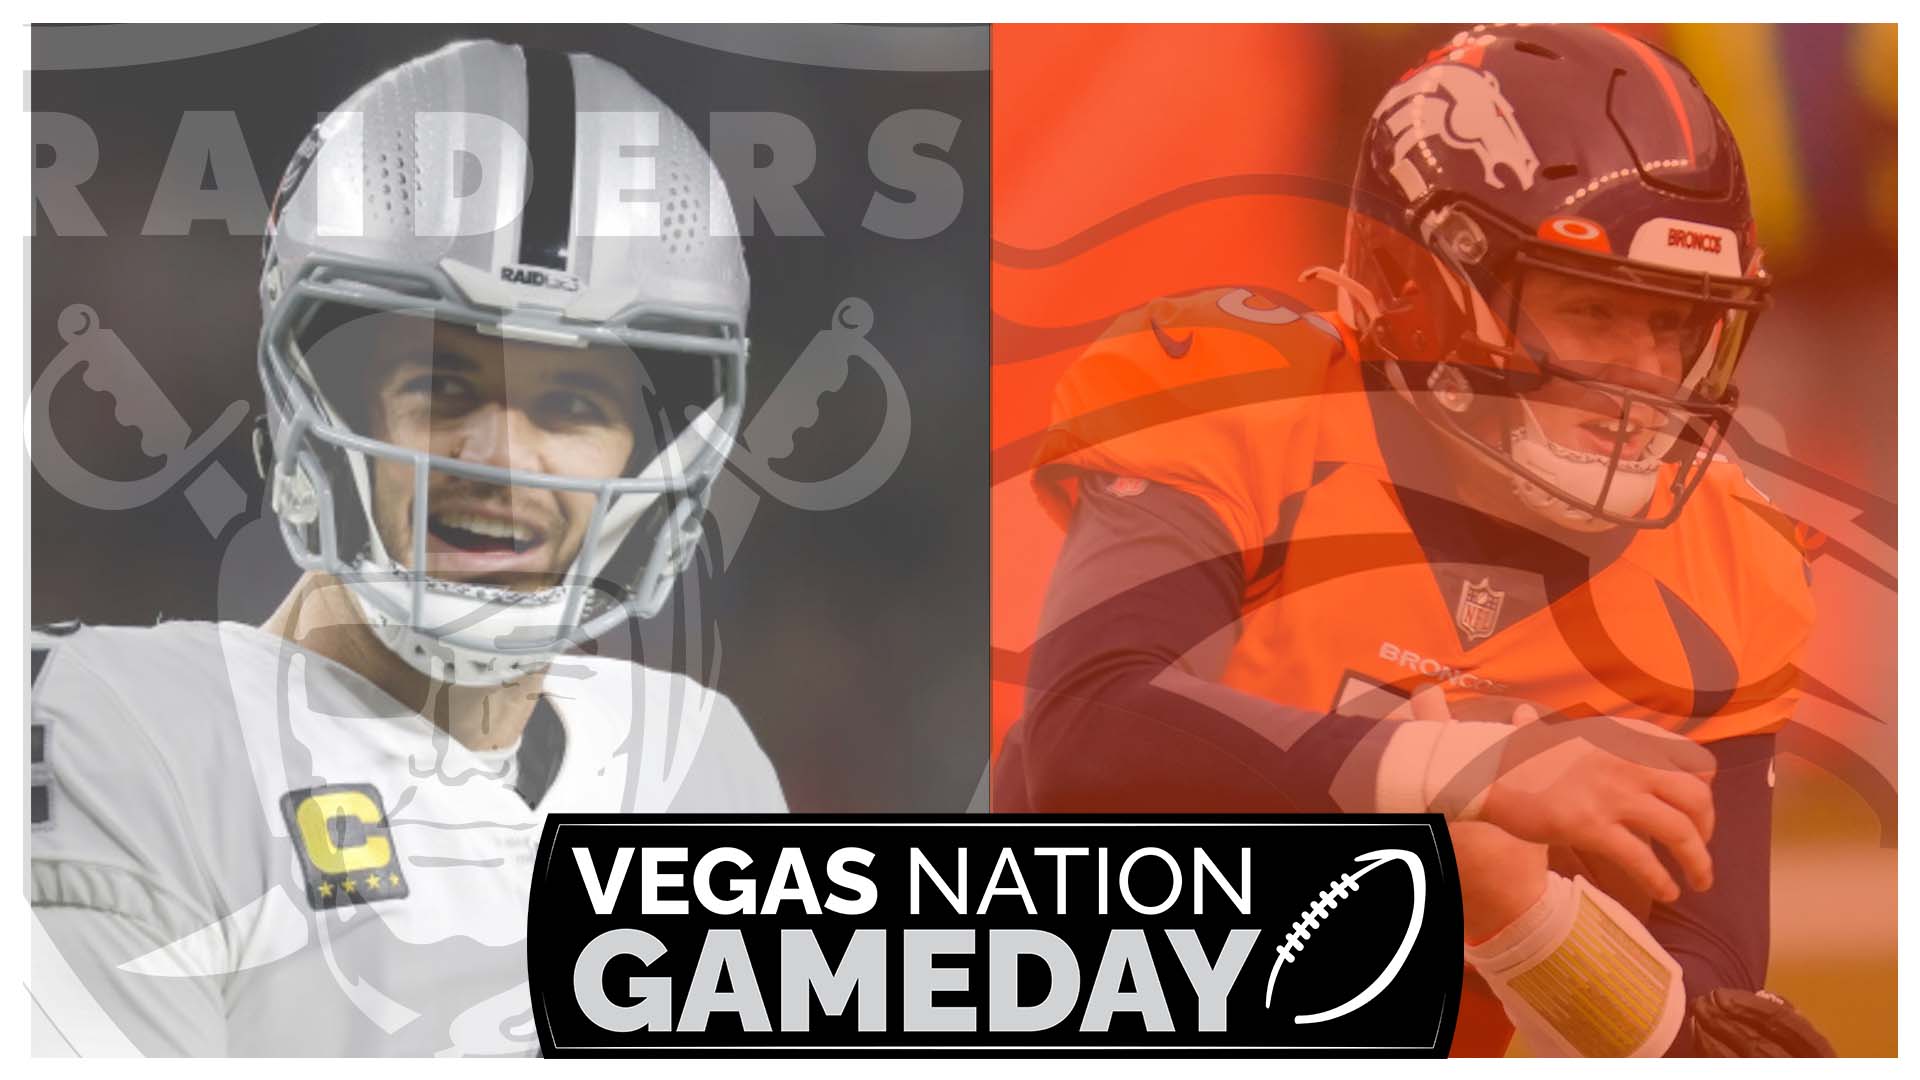 Raiders Look to Sweep Broncos | Vegas Nation Gameday